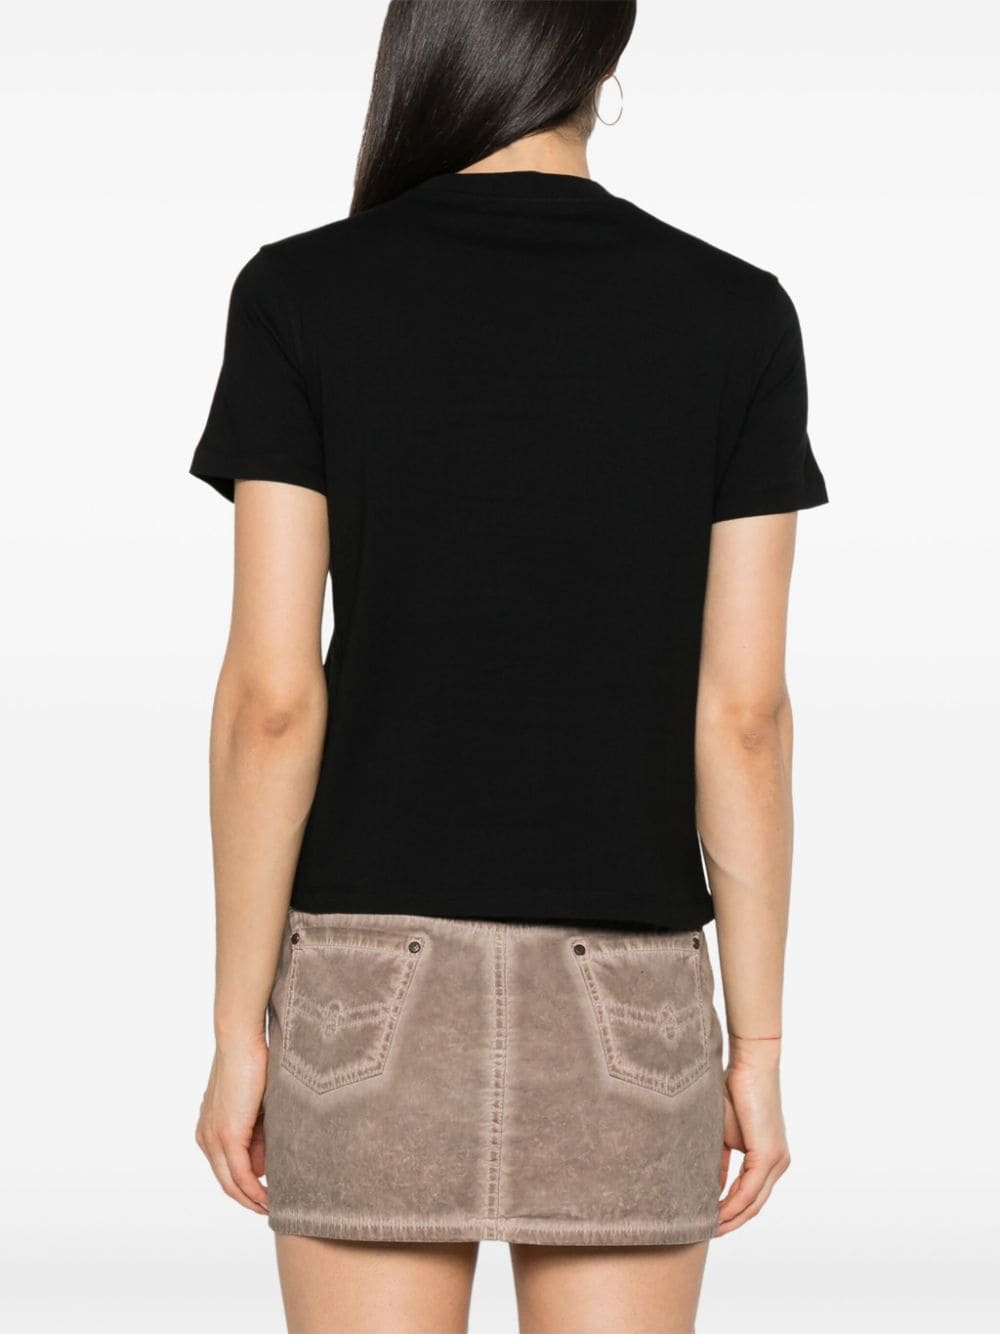 Versace Jeans Couture T-shirt met print Zwart